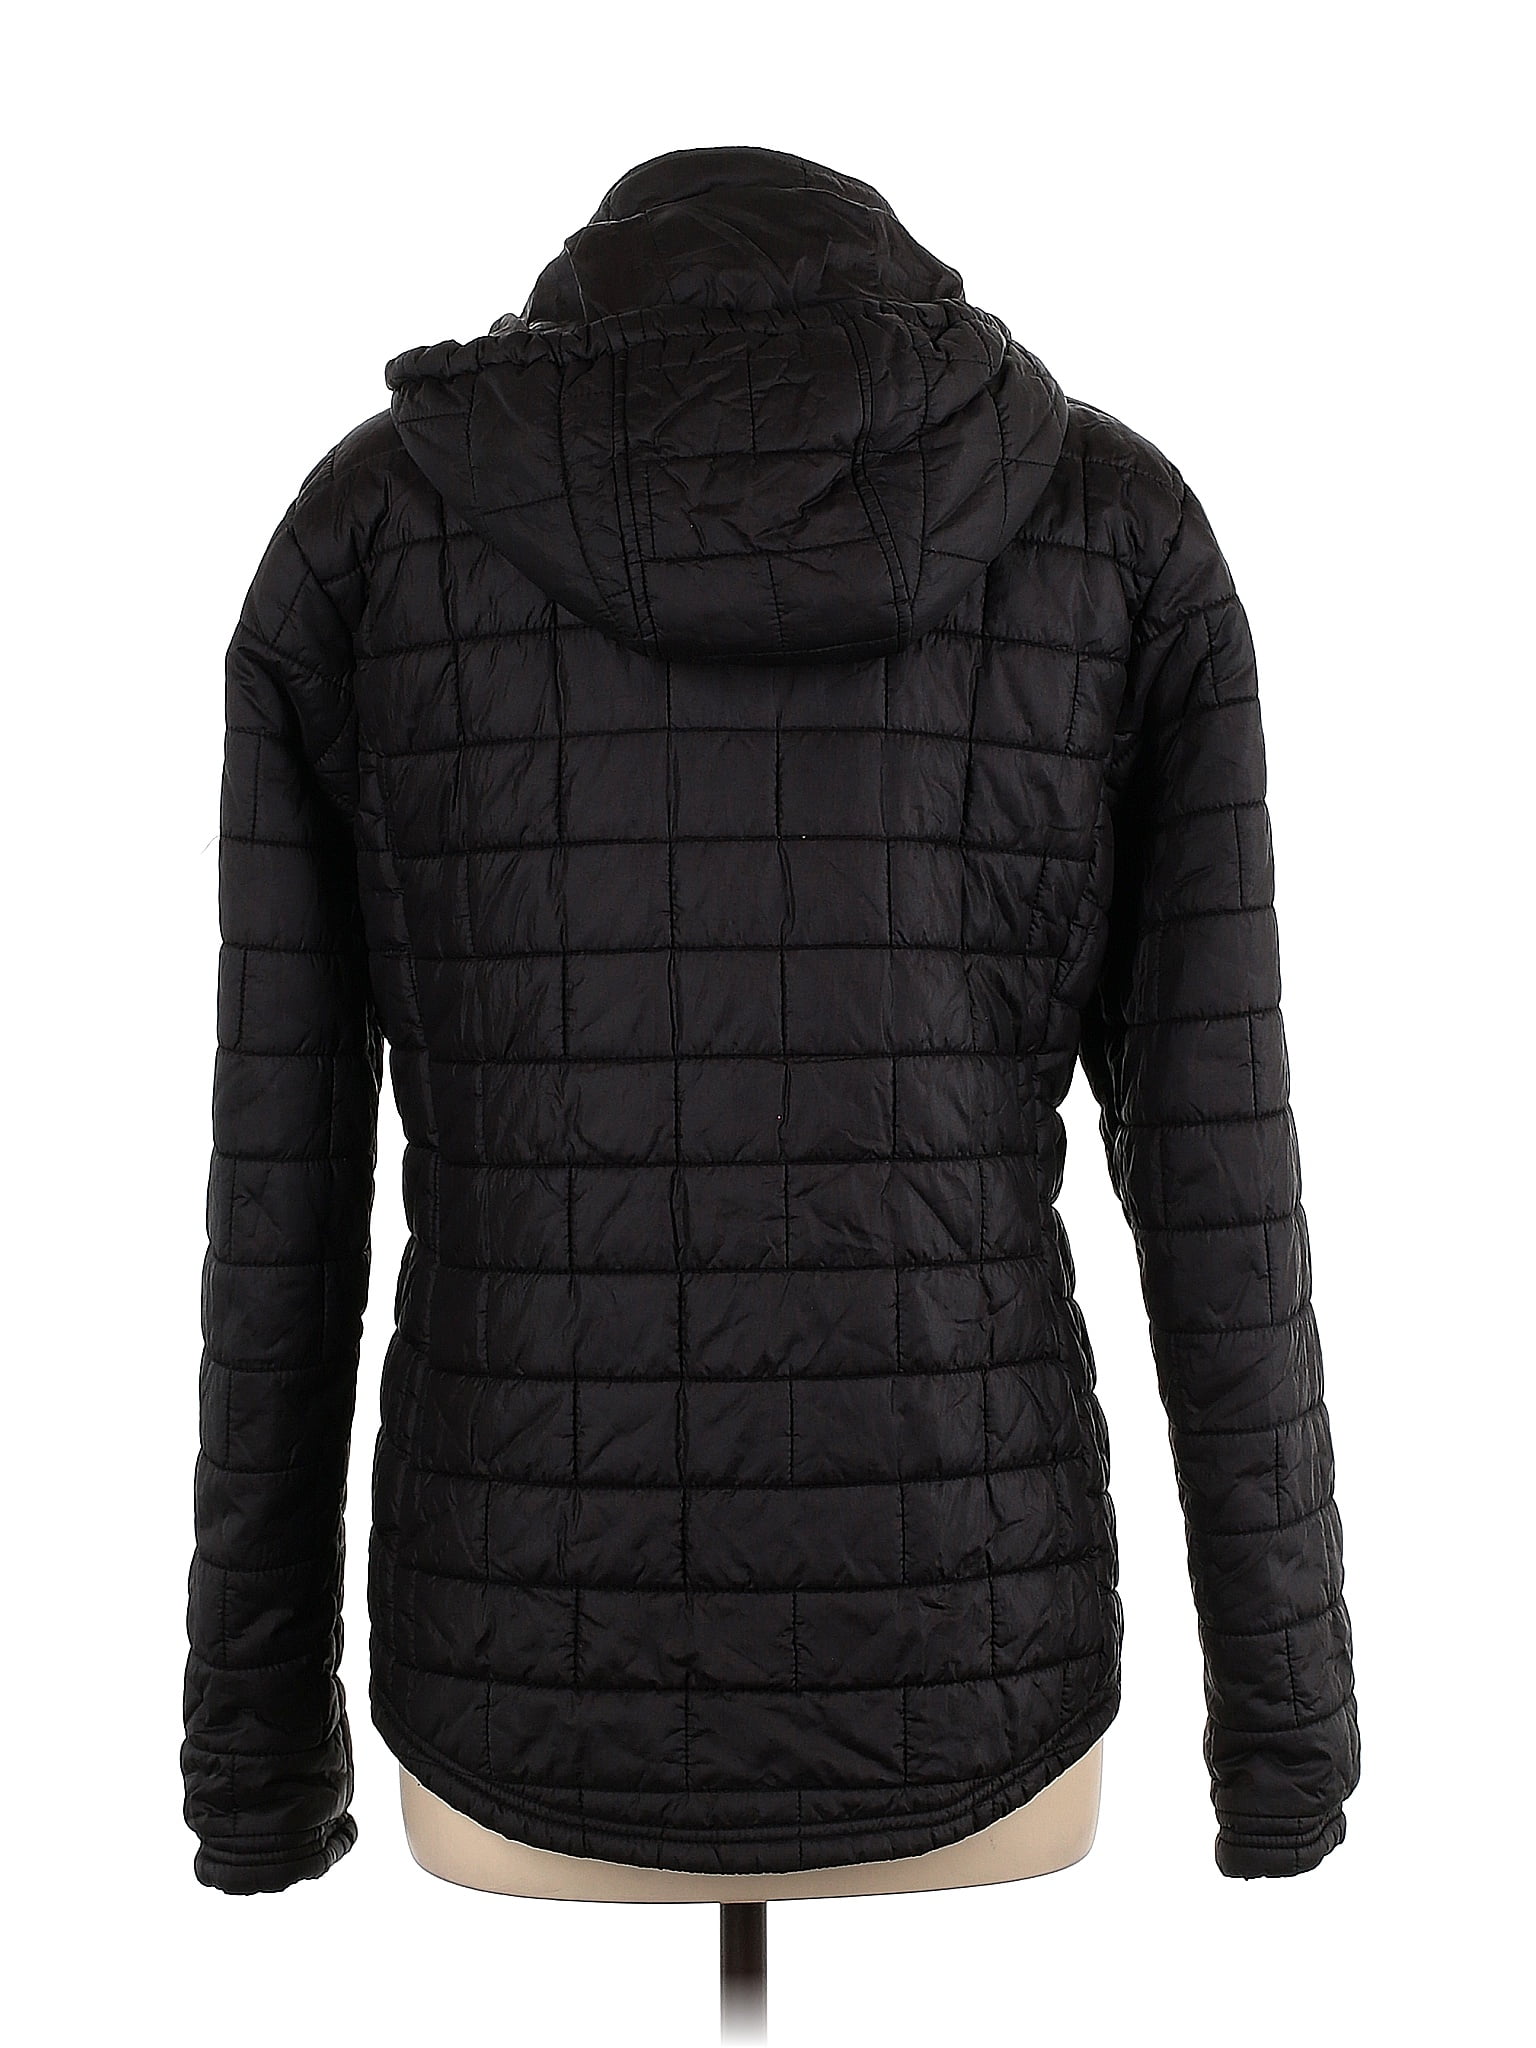 Fossa Apparel 100% Nylon Solid Black Jacket Size M - 63% off